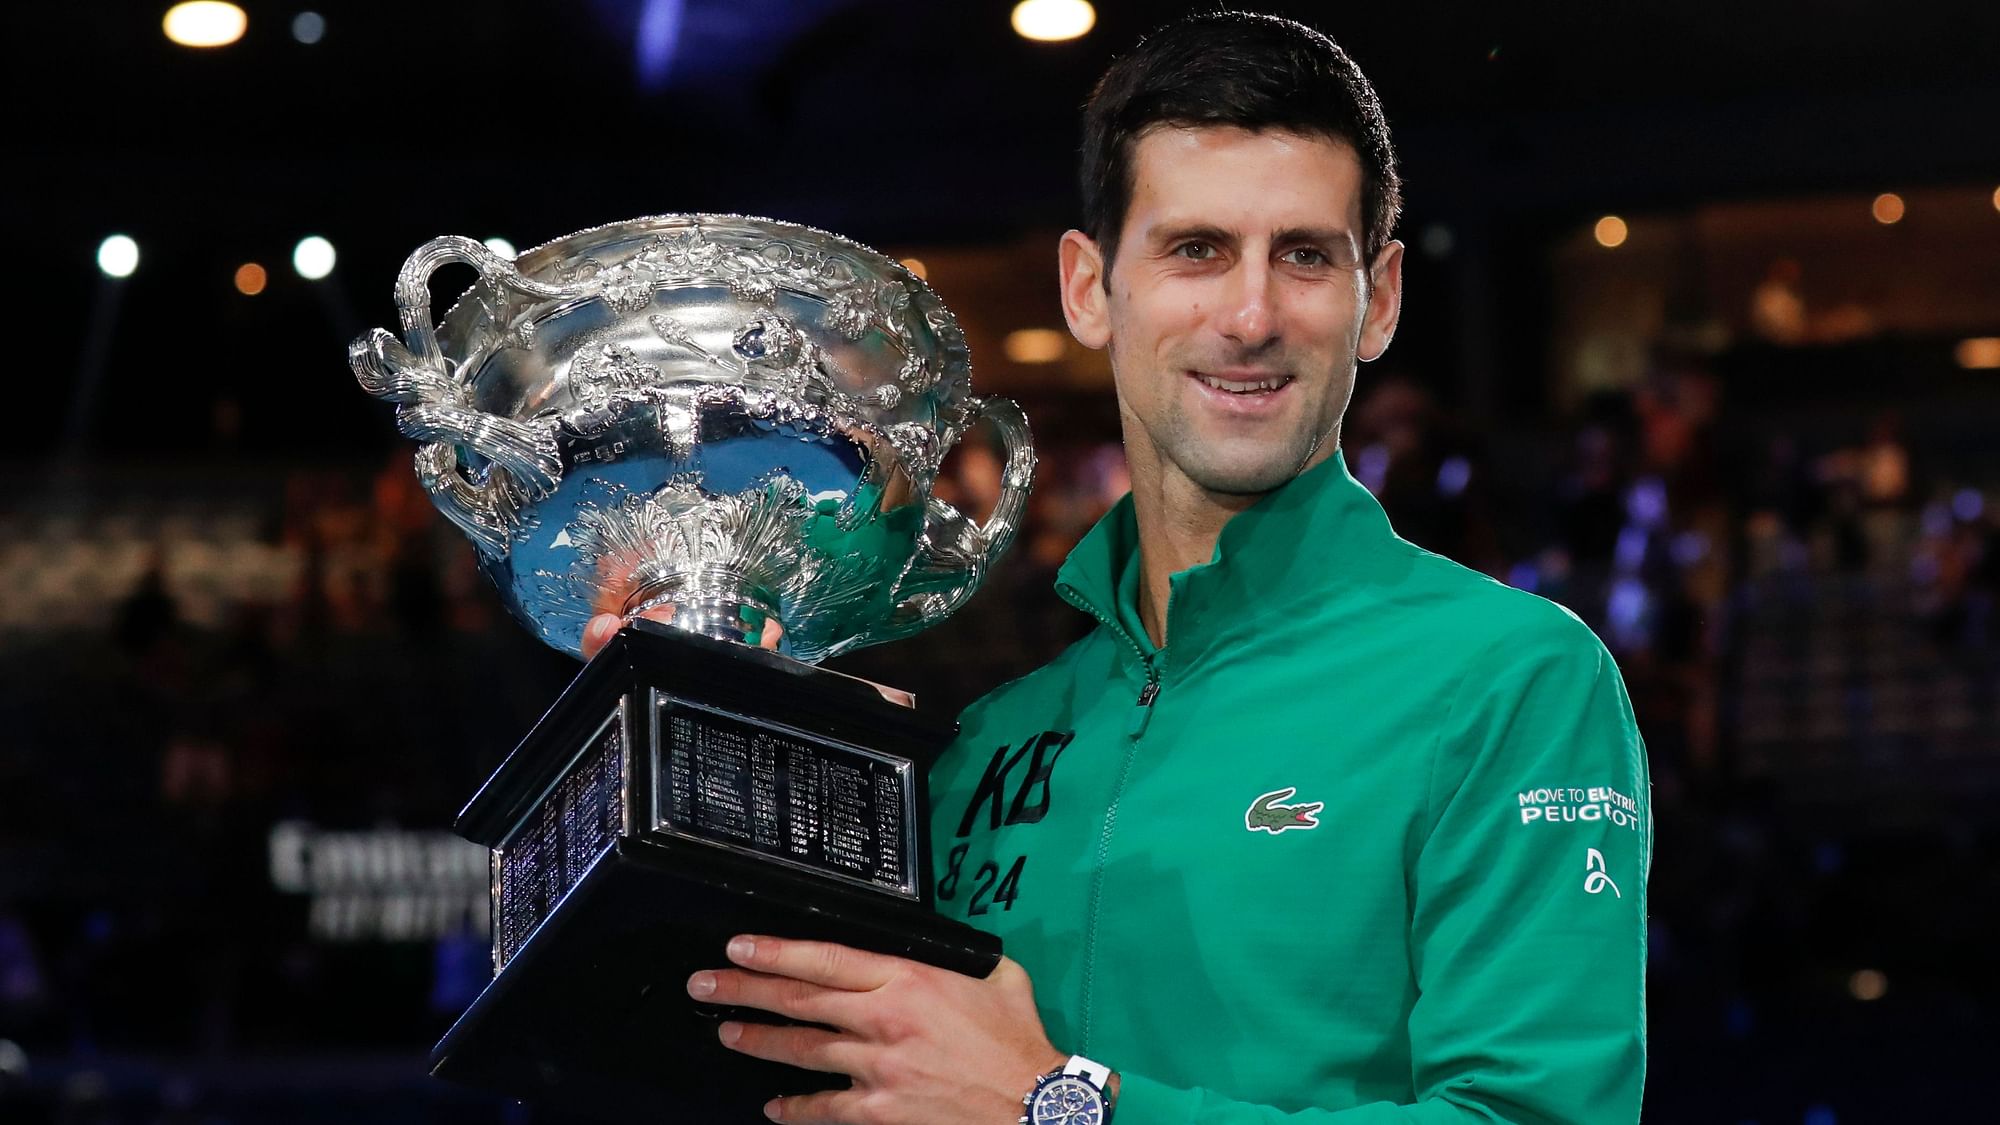 Australian Open 2020: Djokovic wins 8th title with five-set win over Thiem